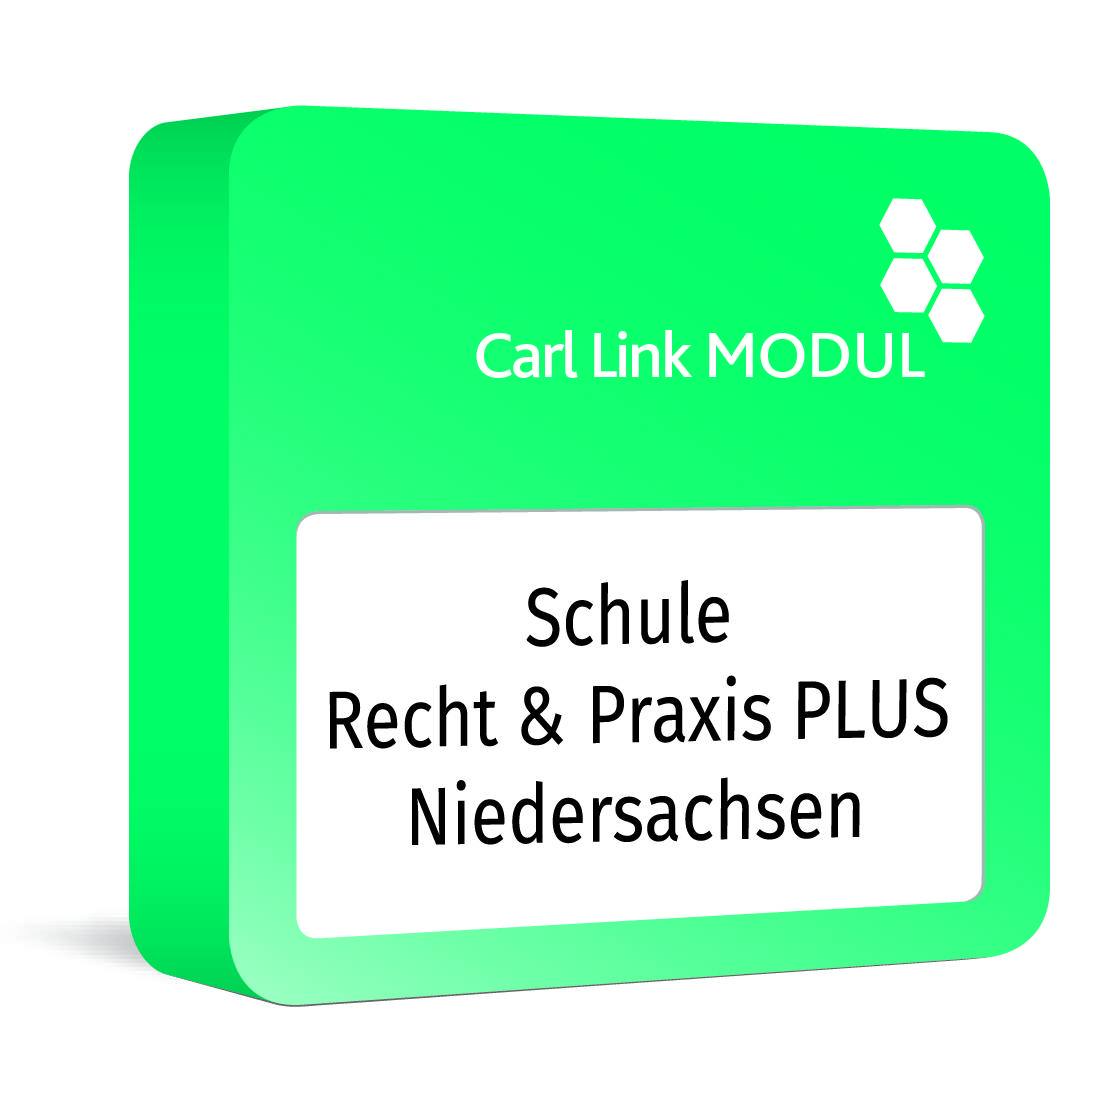 Carl Link Modul Schule - Recht & Praxis PLUS Niedersachsen